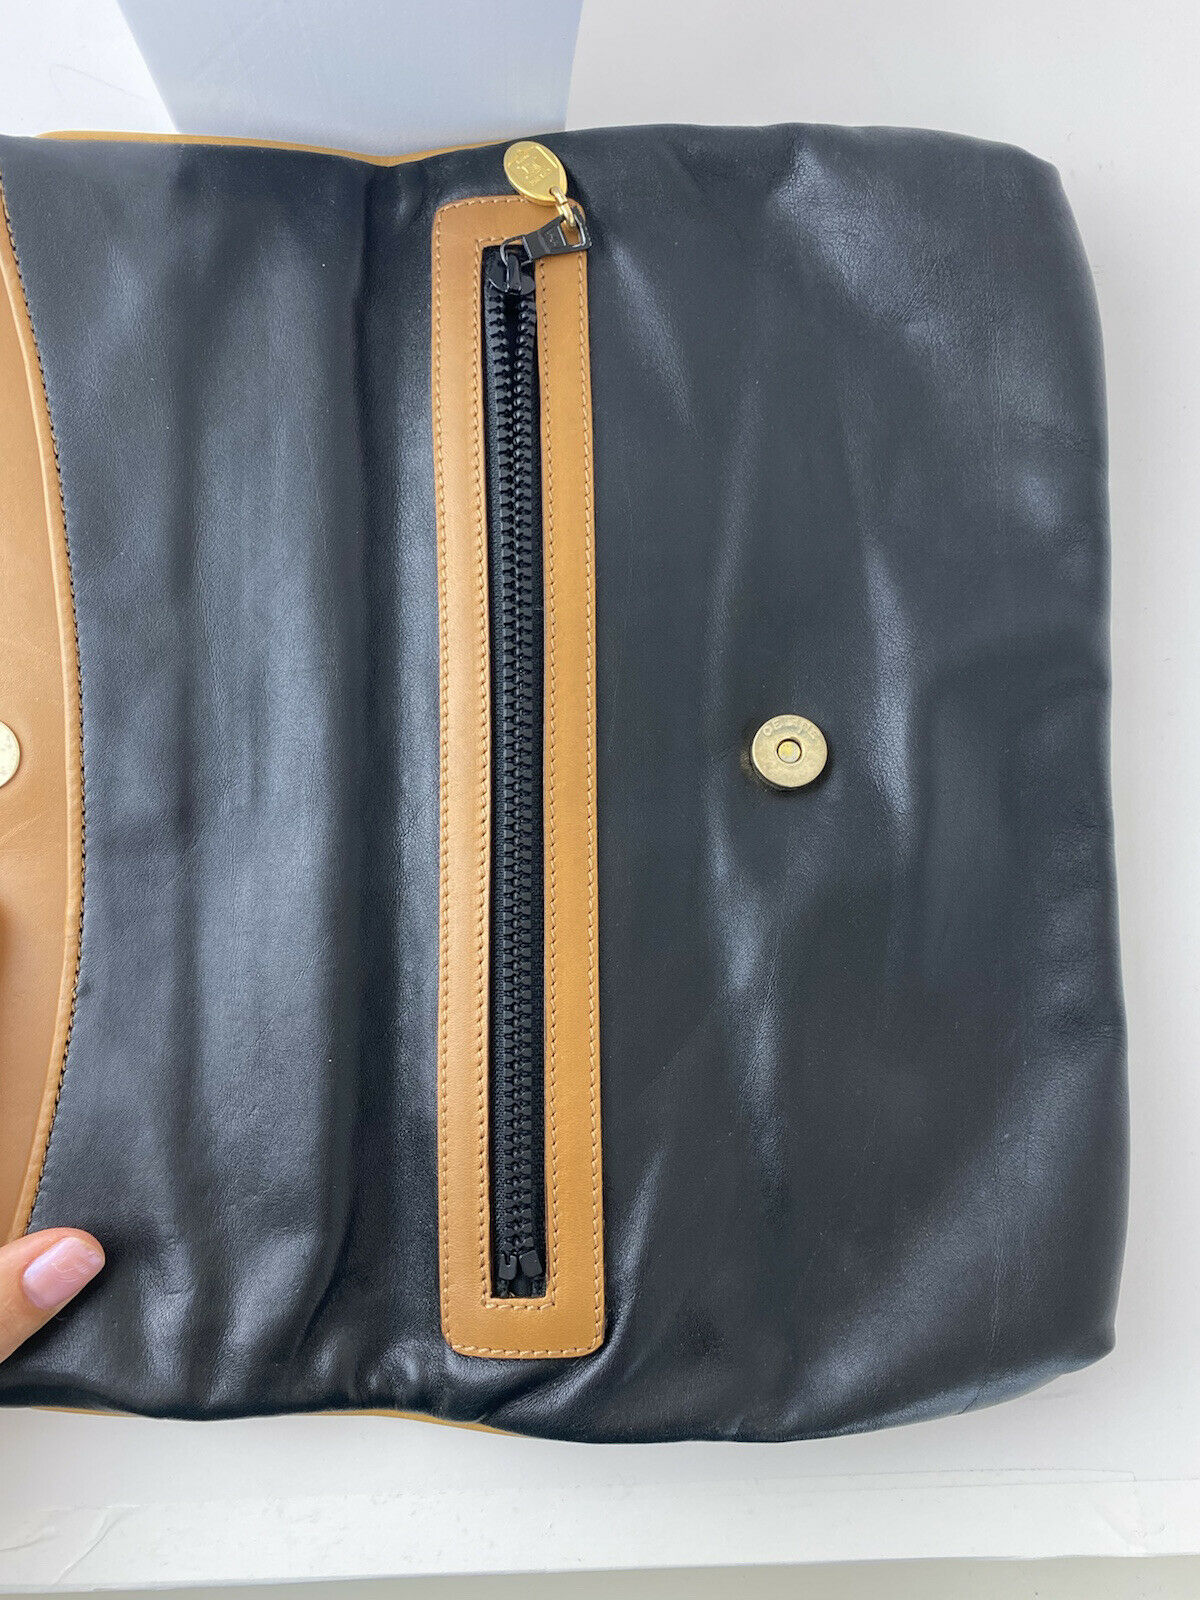 CELINE Vintage Leather Clutch Bag Logo Made in Italy Black Brown